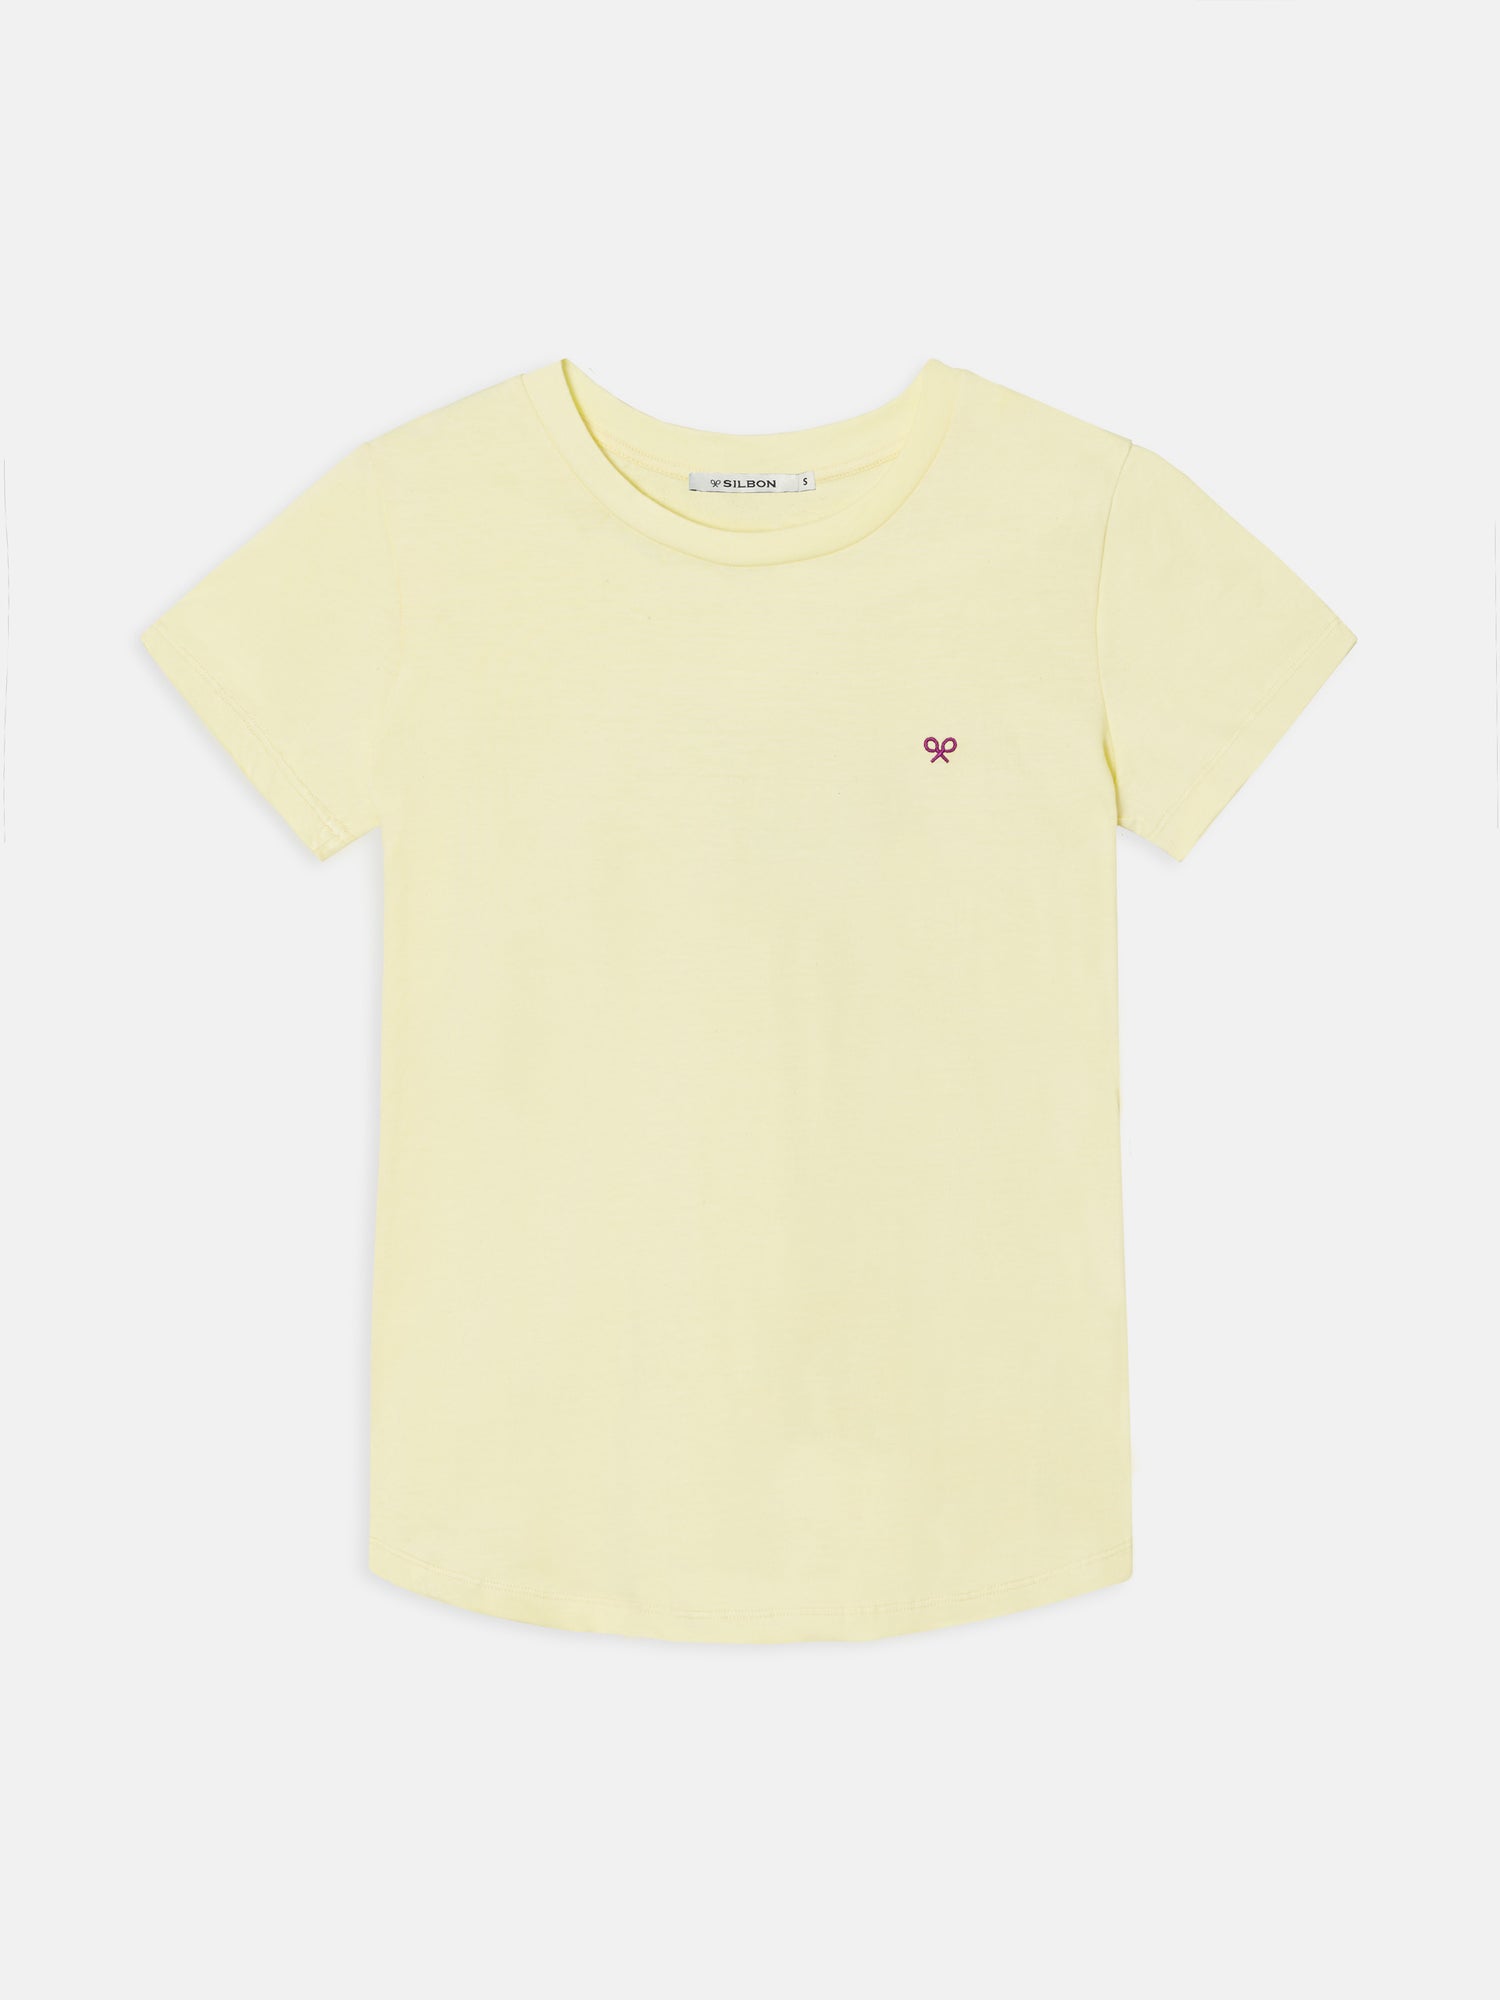 Camiseta woman smile amarilla